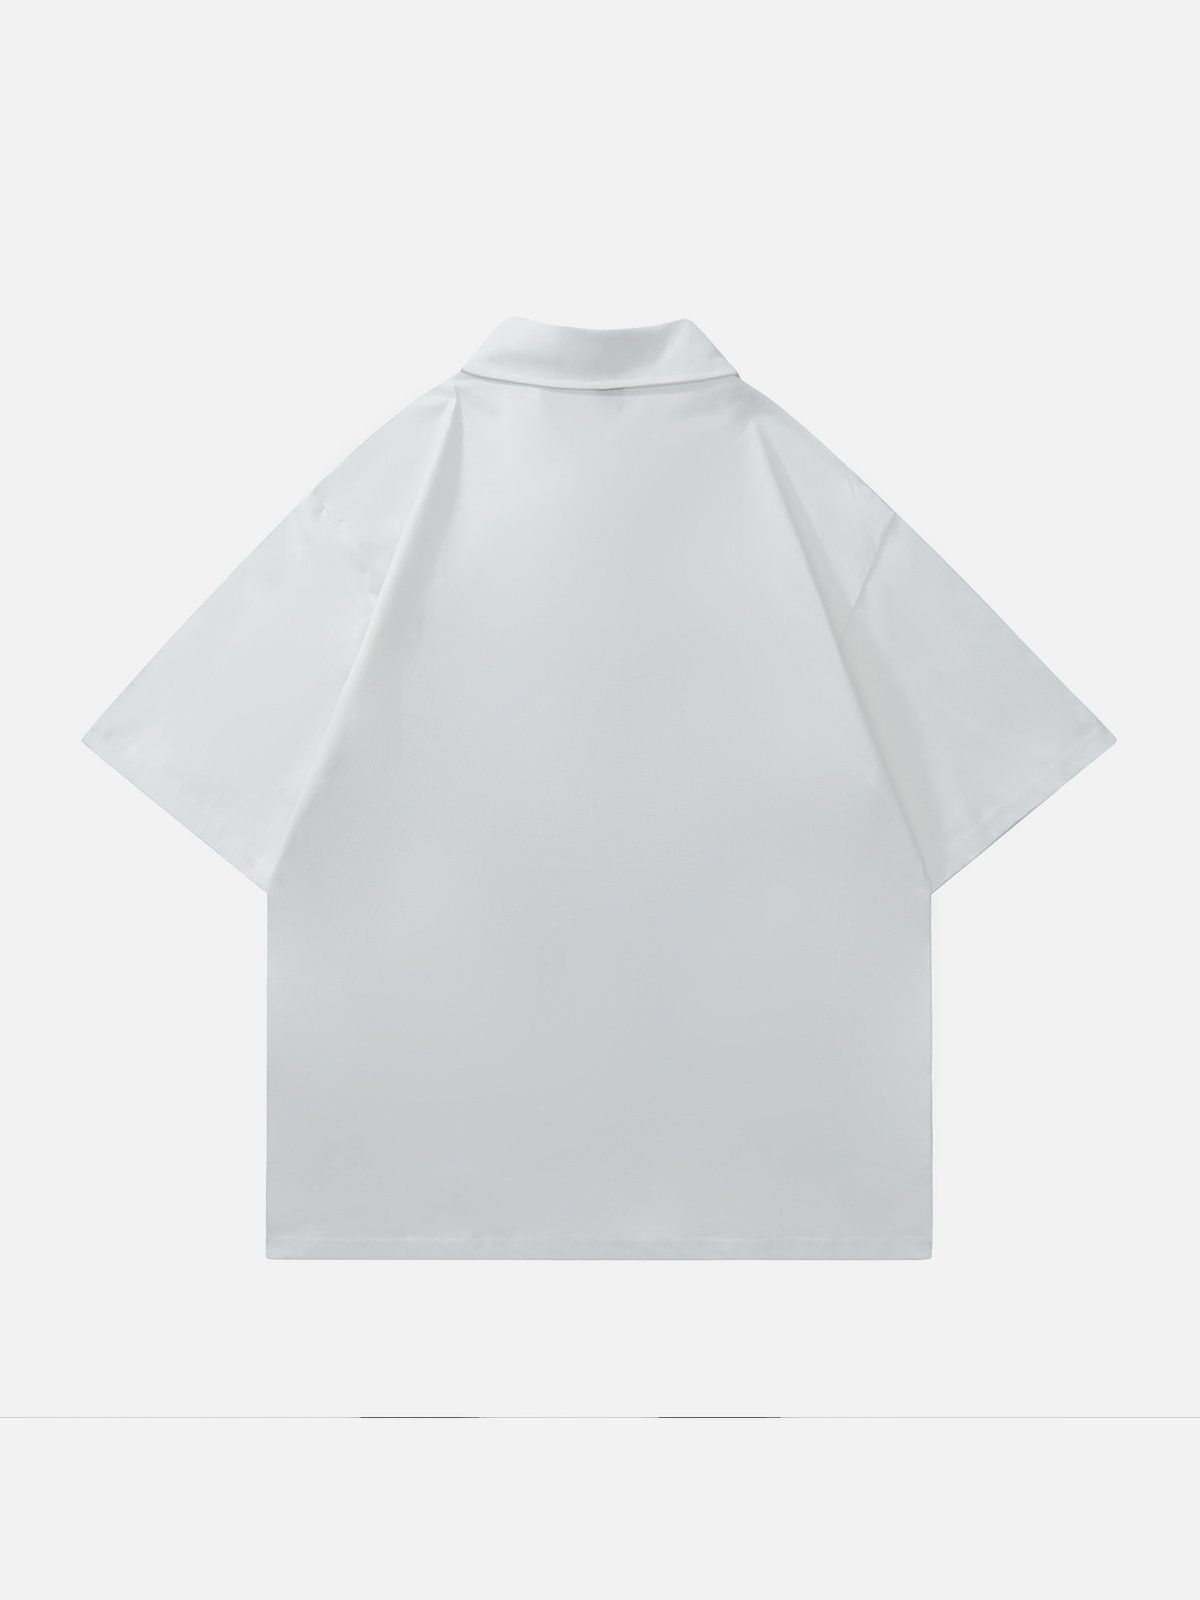 Majesda® - Embroidery Split Heart Short Sleeve Shirts outfit ideas streetwear fashion